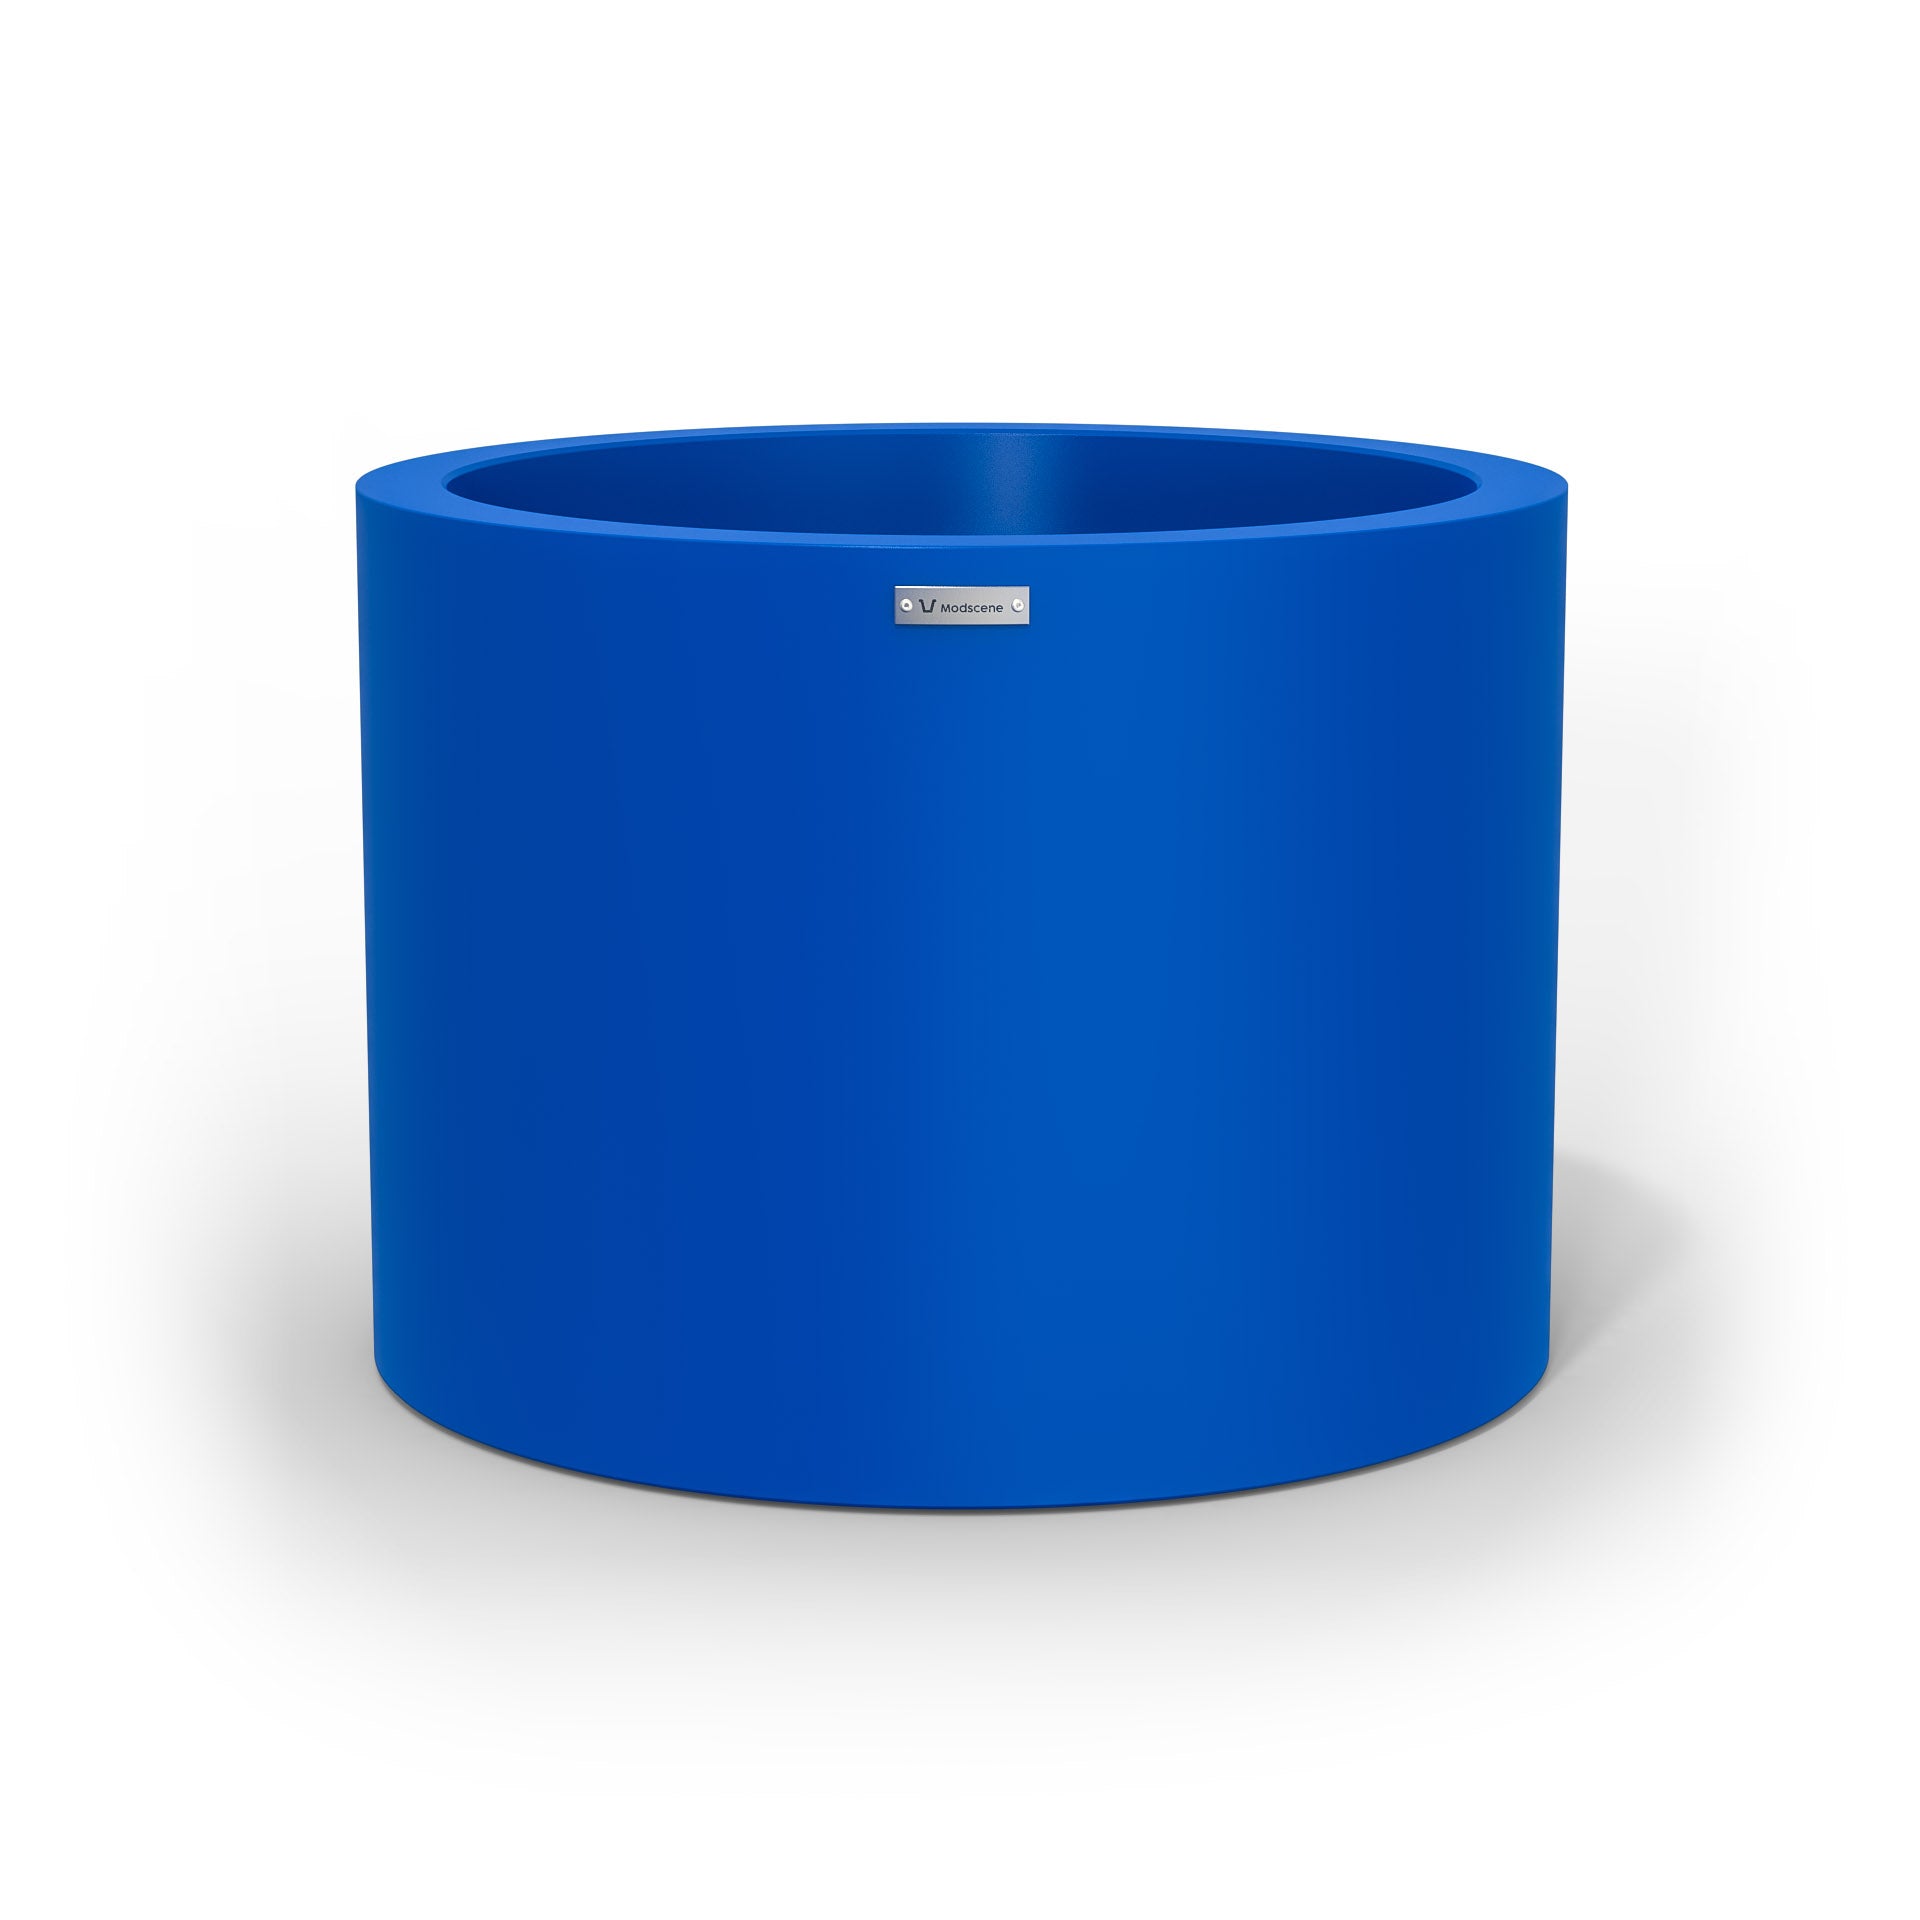 A cylinder shaped pot planter in a deep blue colour.